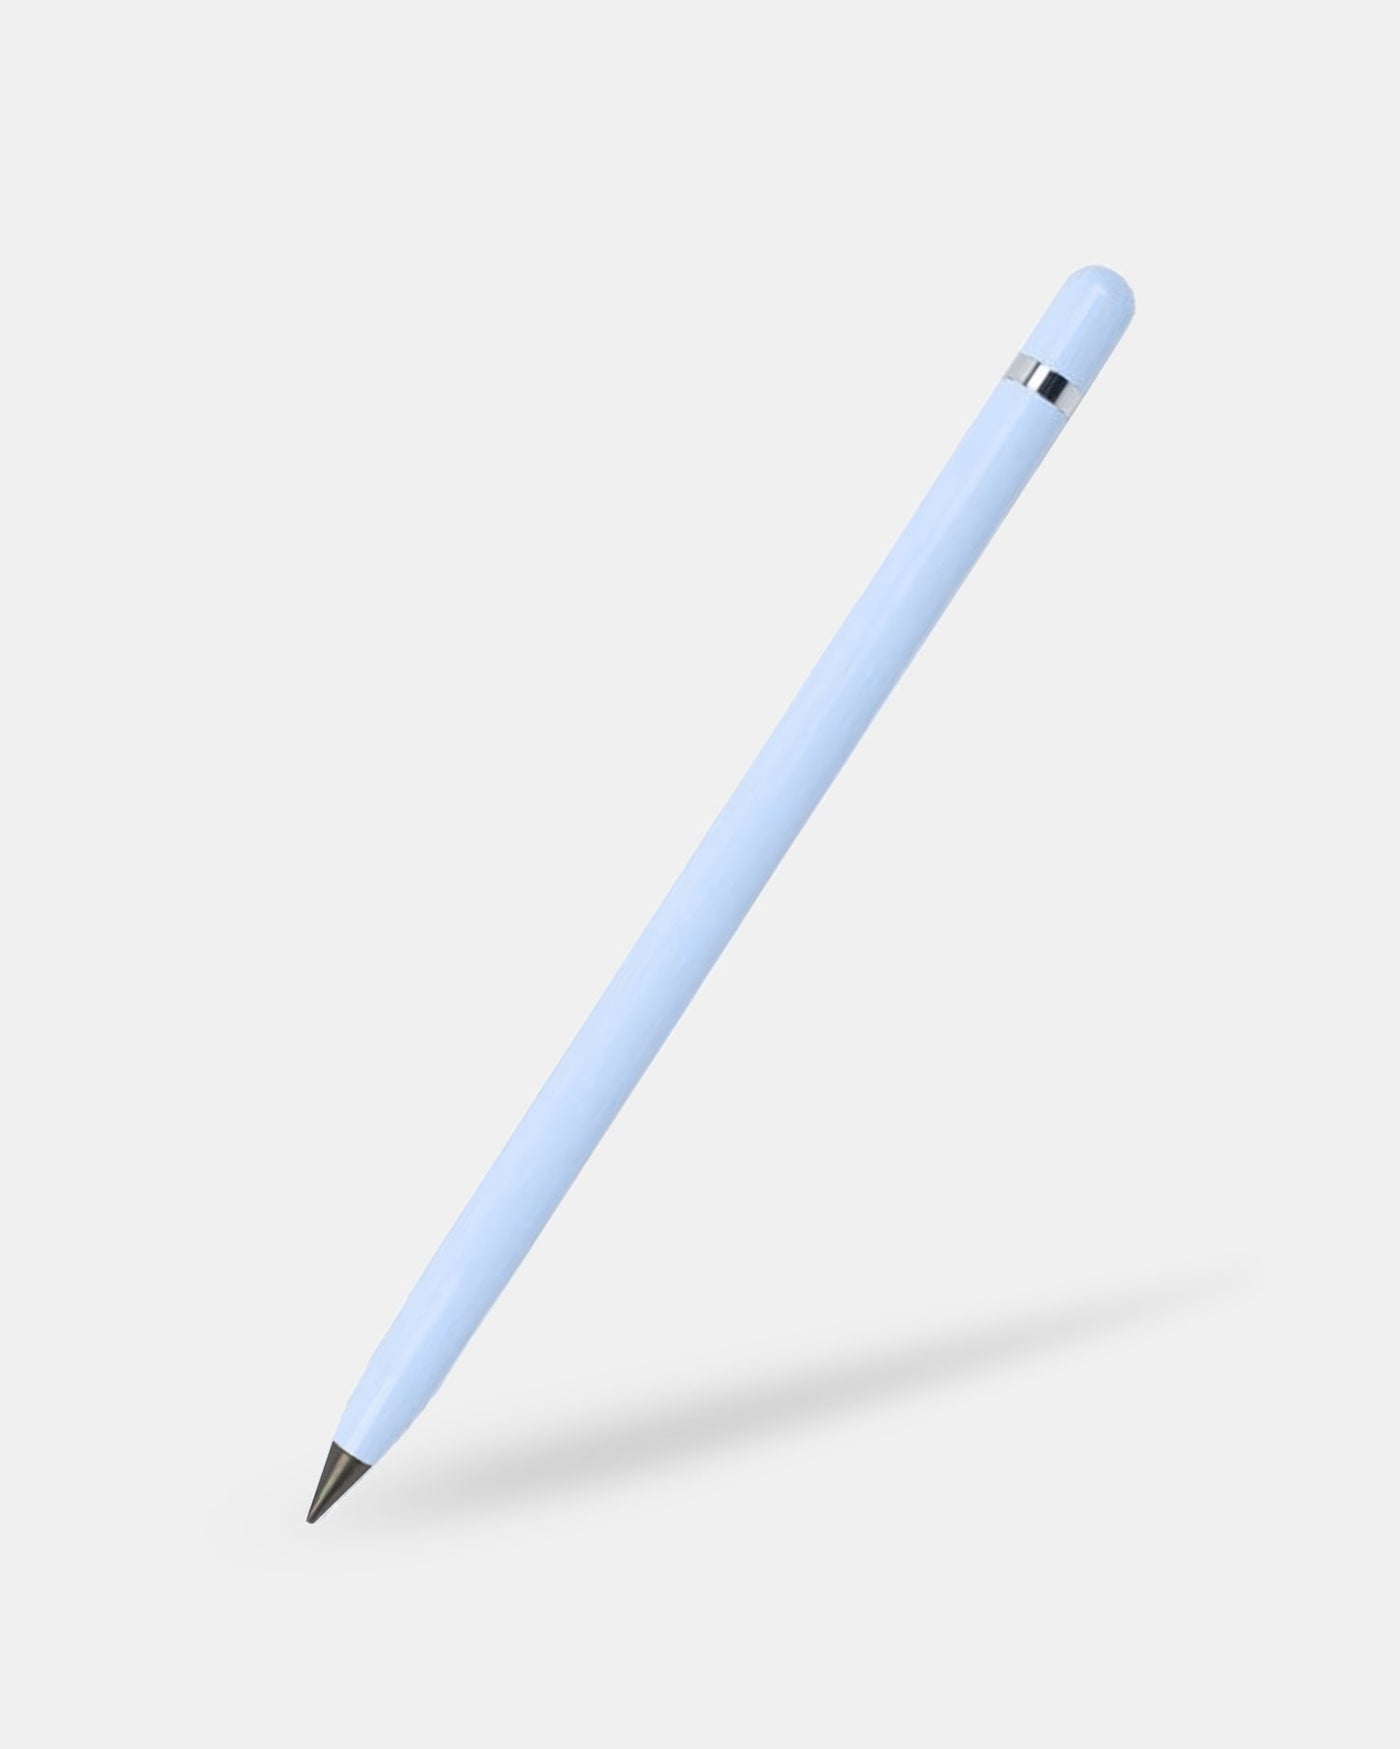 Infinity Pencil™ – Lil Problem Solver